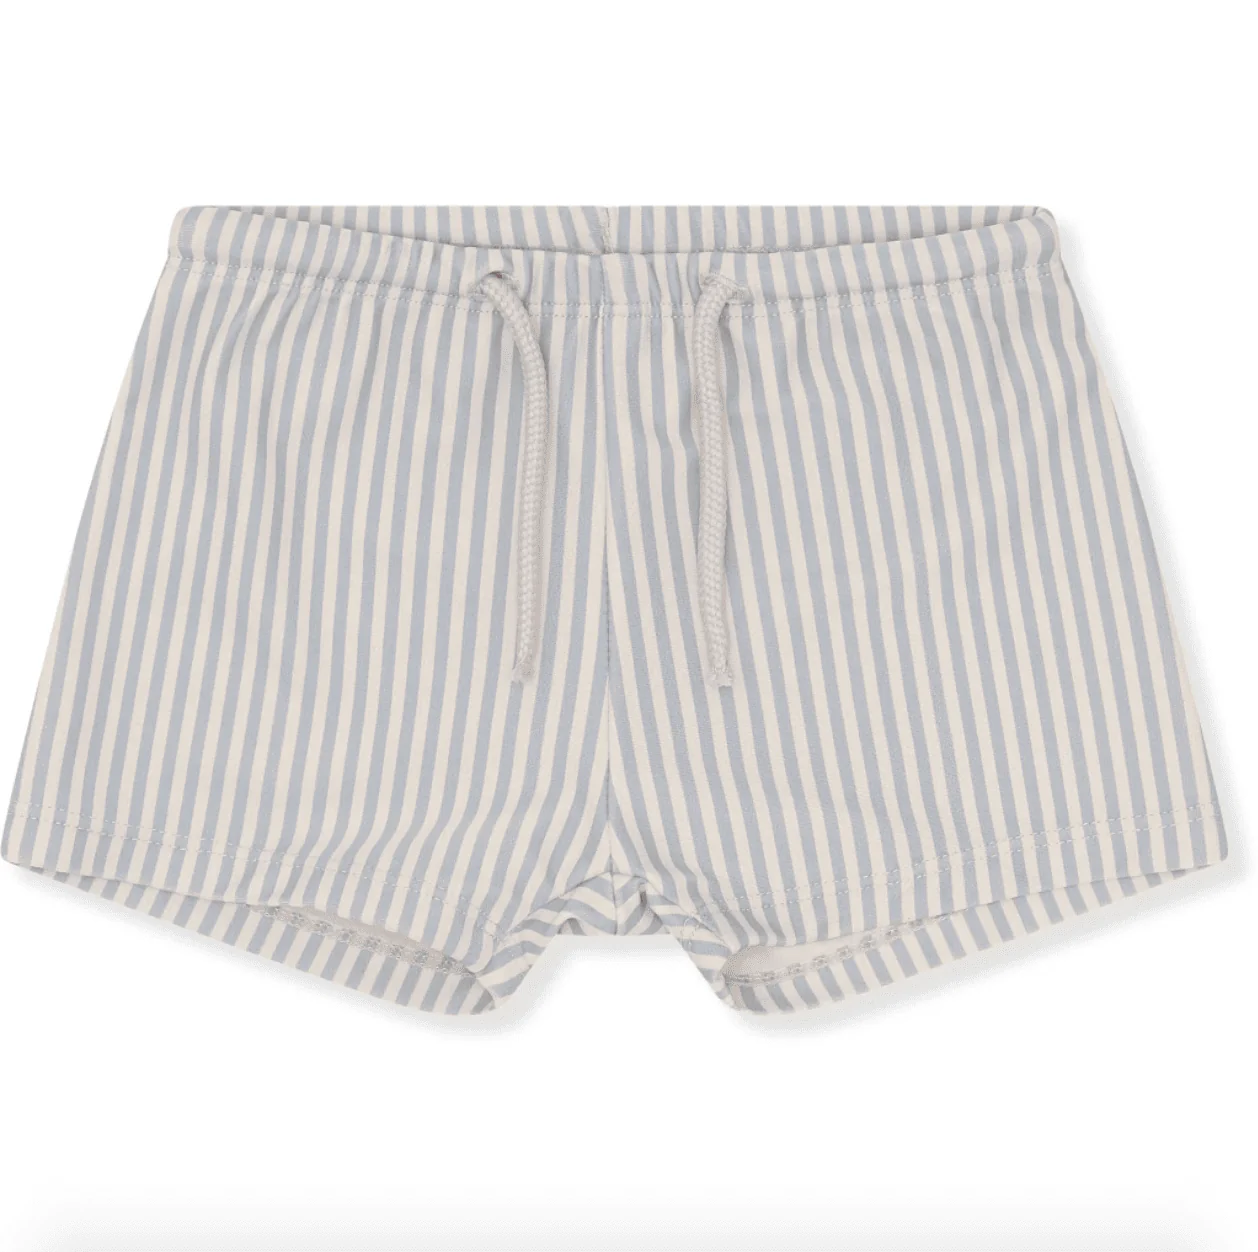 Unisex swim shorts in a light blue and cream pinstripe pattern